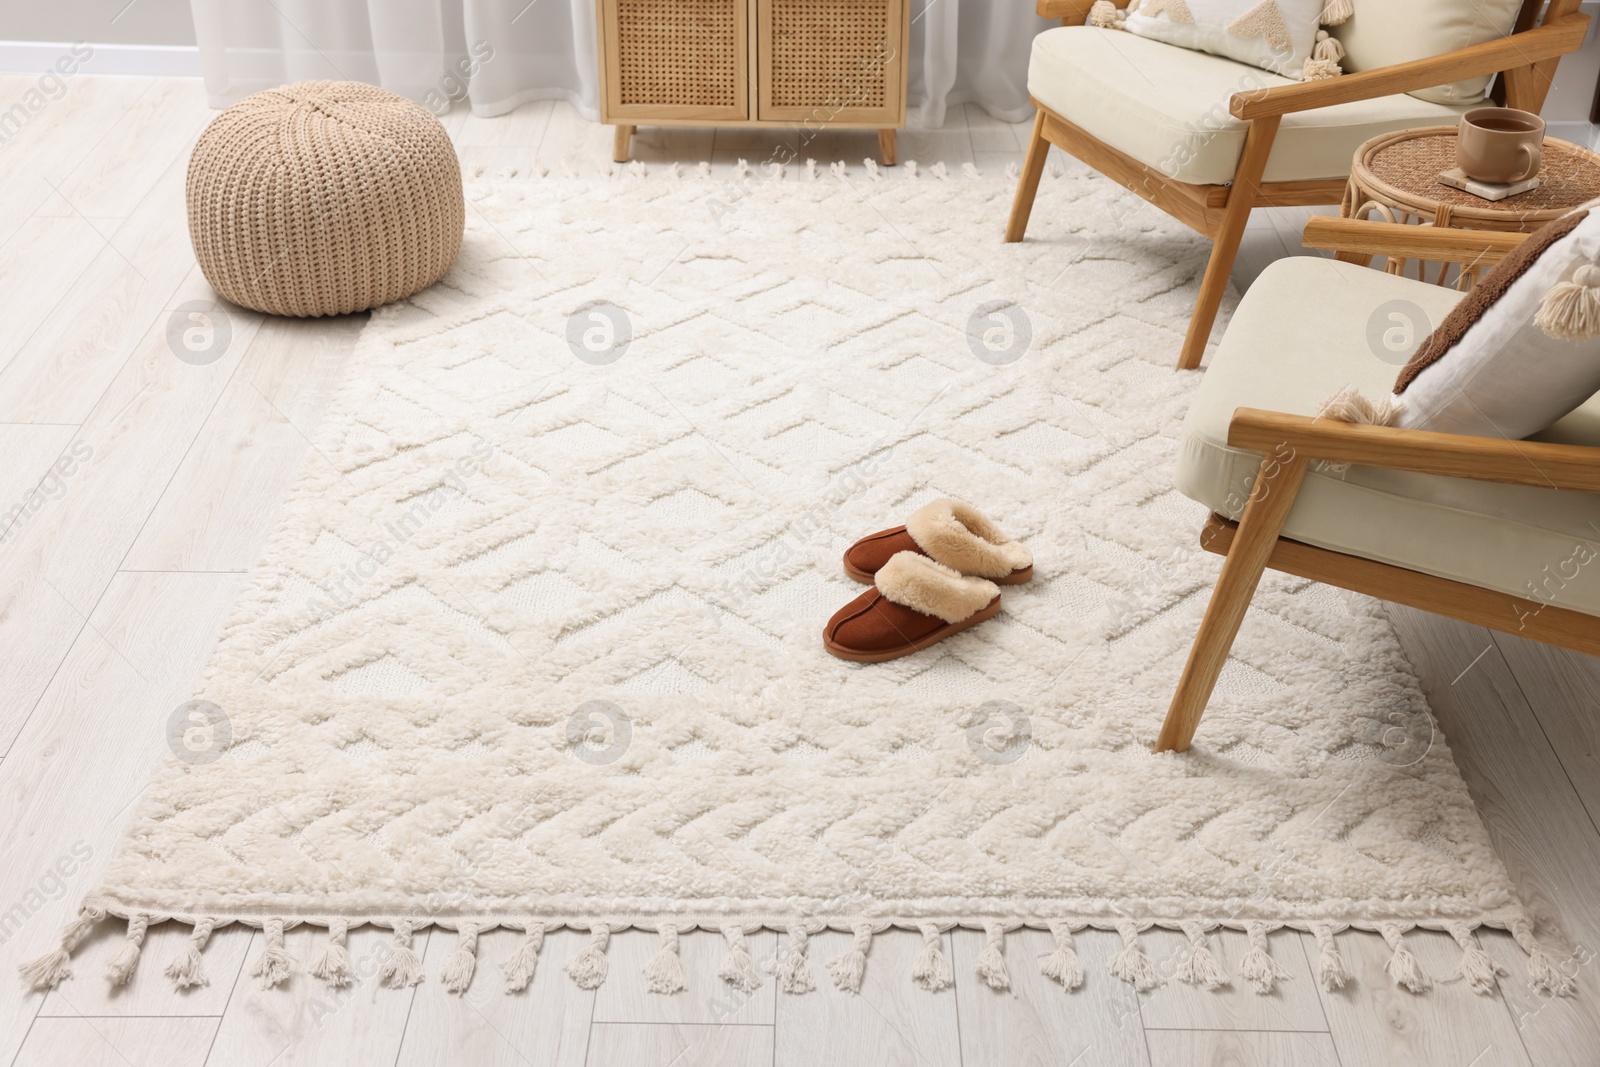 Photo of Slippers on soft white carpet in living room